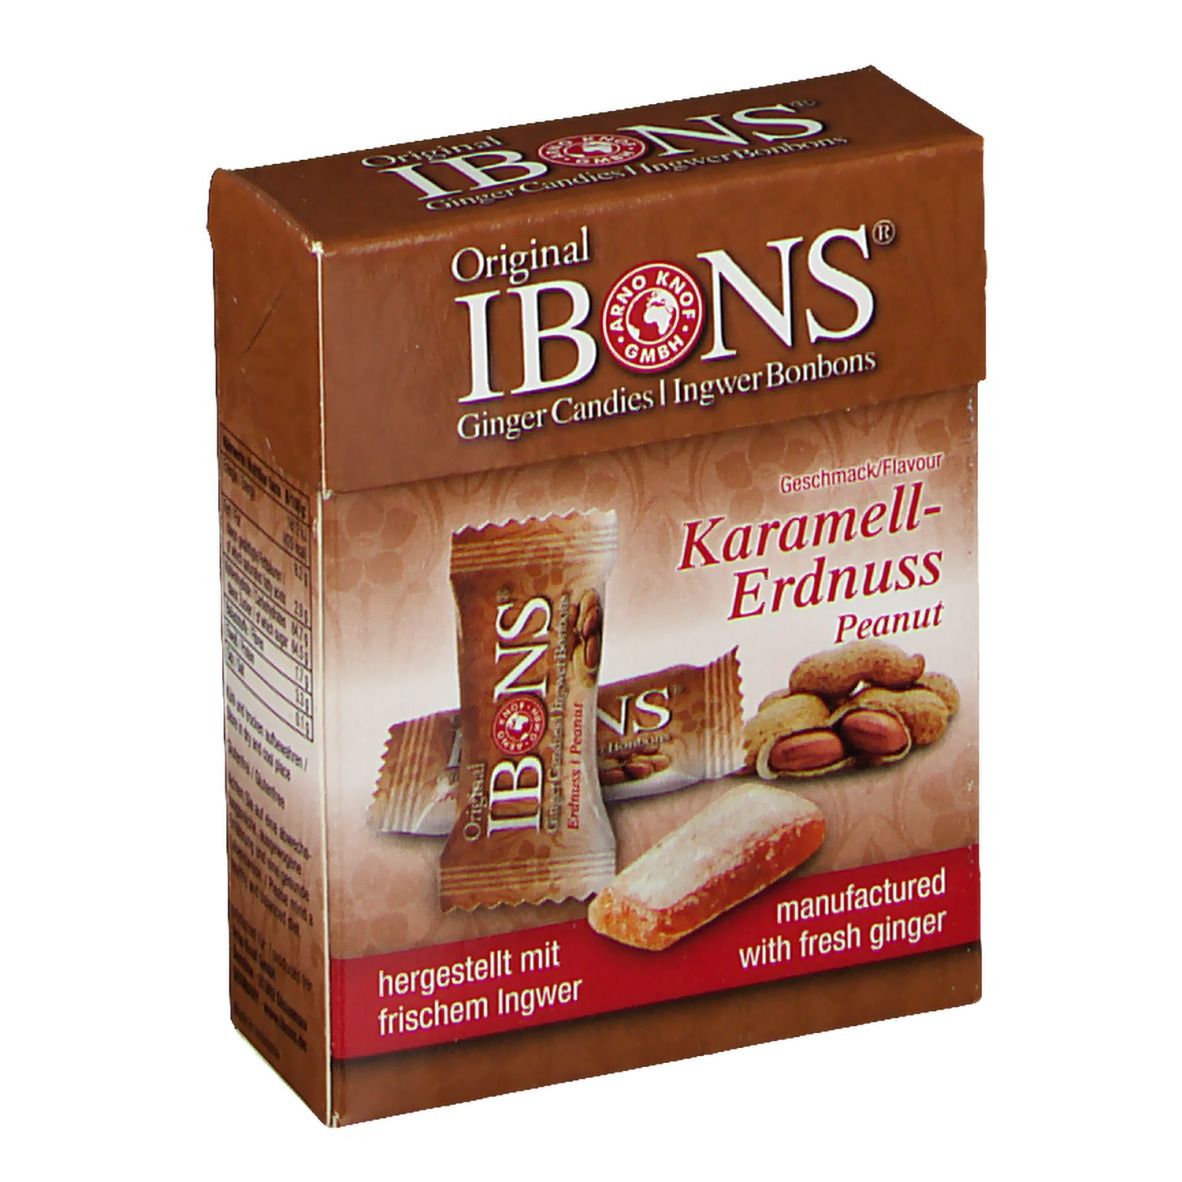 Original IBONS® Karamell-Erdnuss Ingwer Kaubonbons